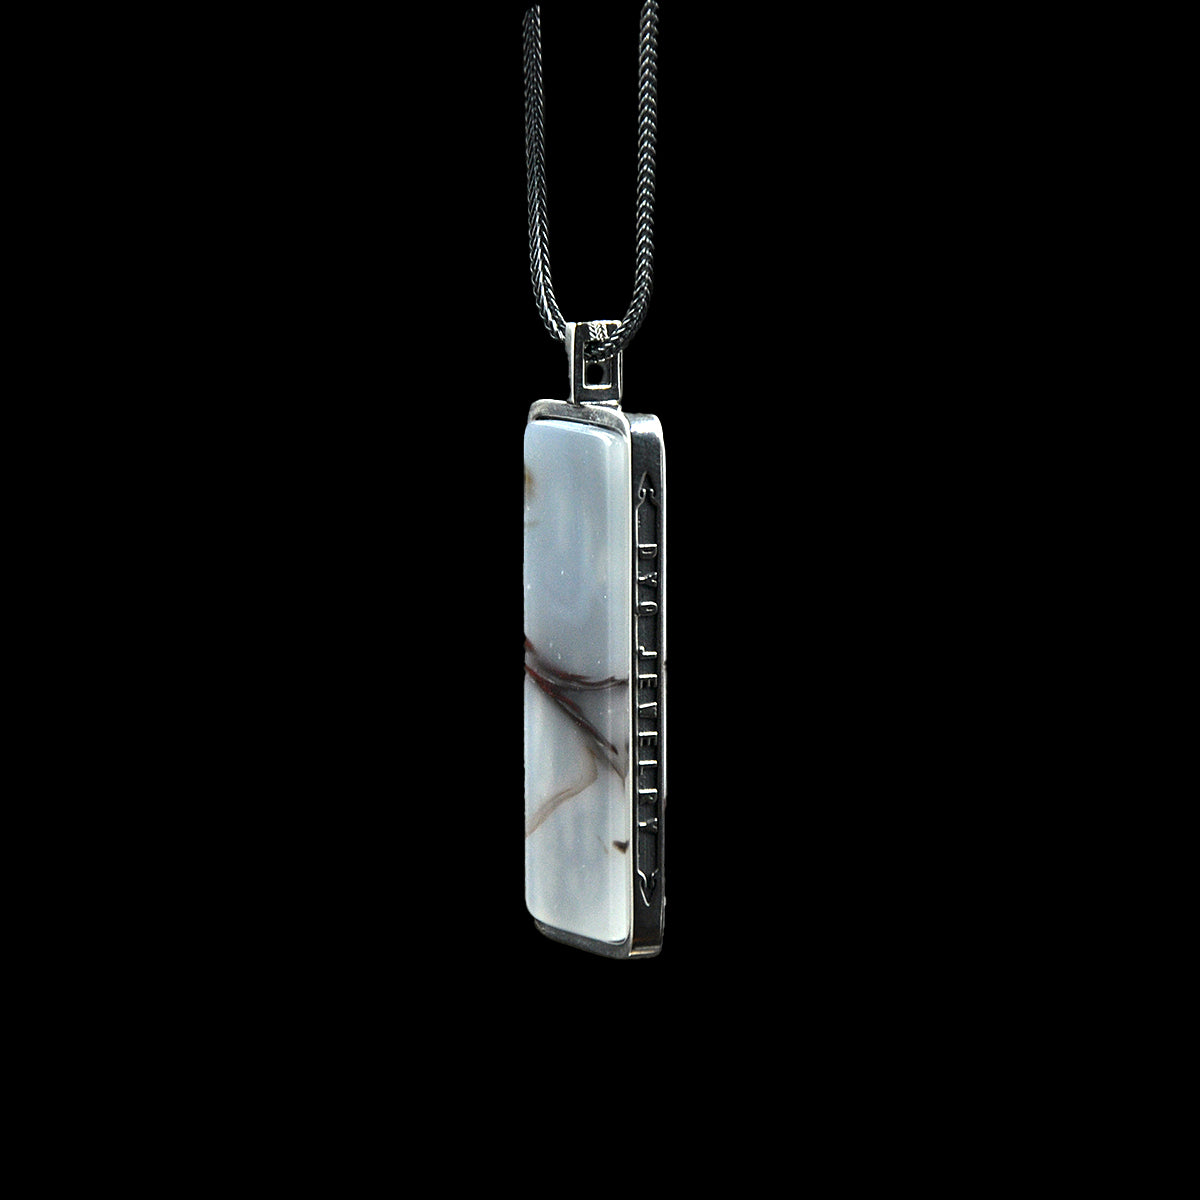 DYQ JEWELRY WuShi 925 Silver White Bloodstone Pendant Men's Necklace